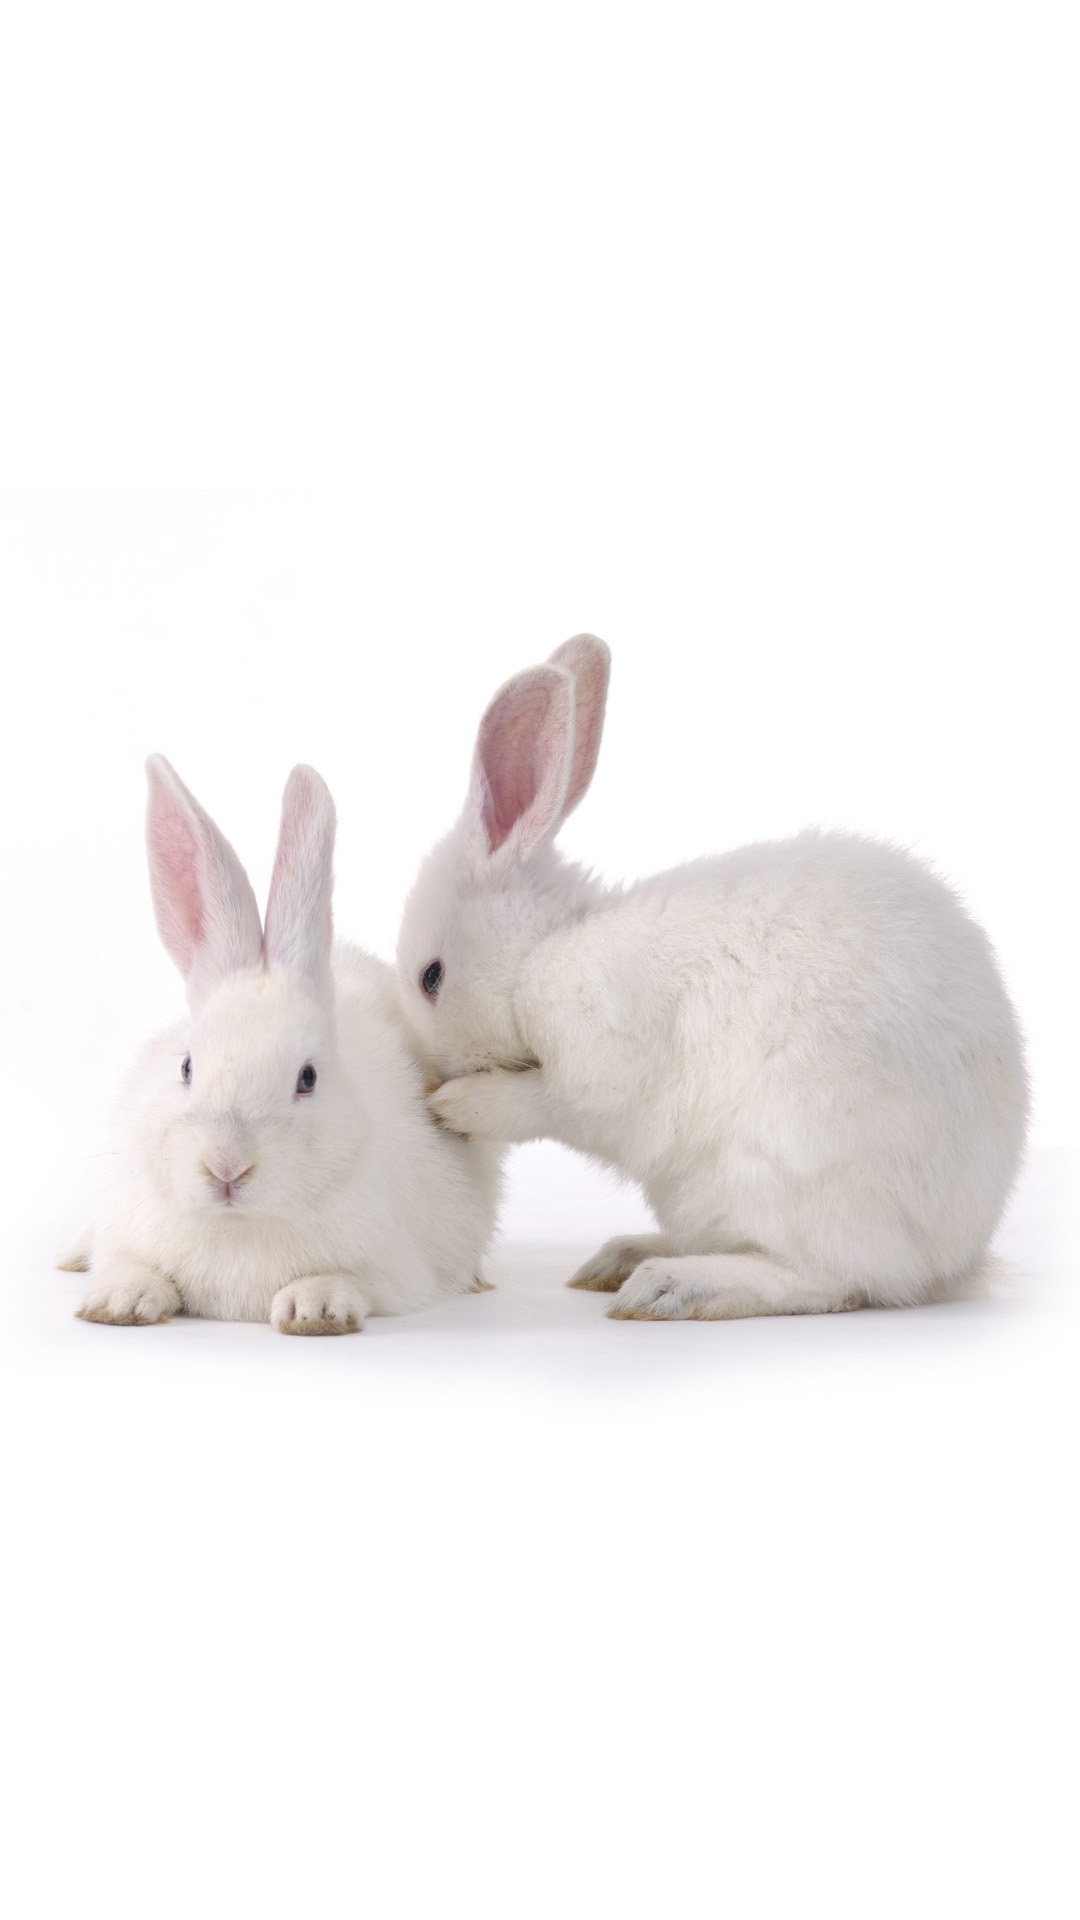 White Rabbit Galaxy S4 Wallpaper HD